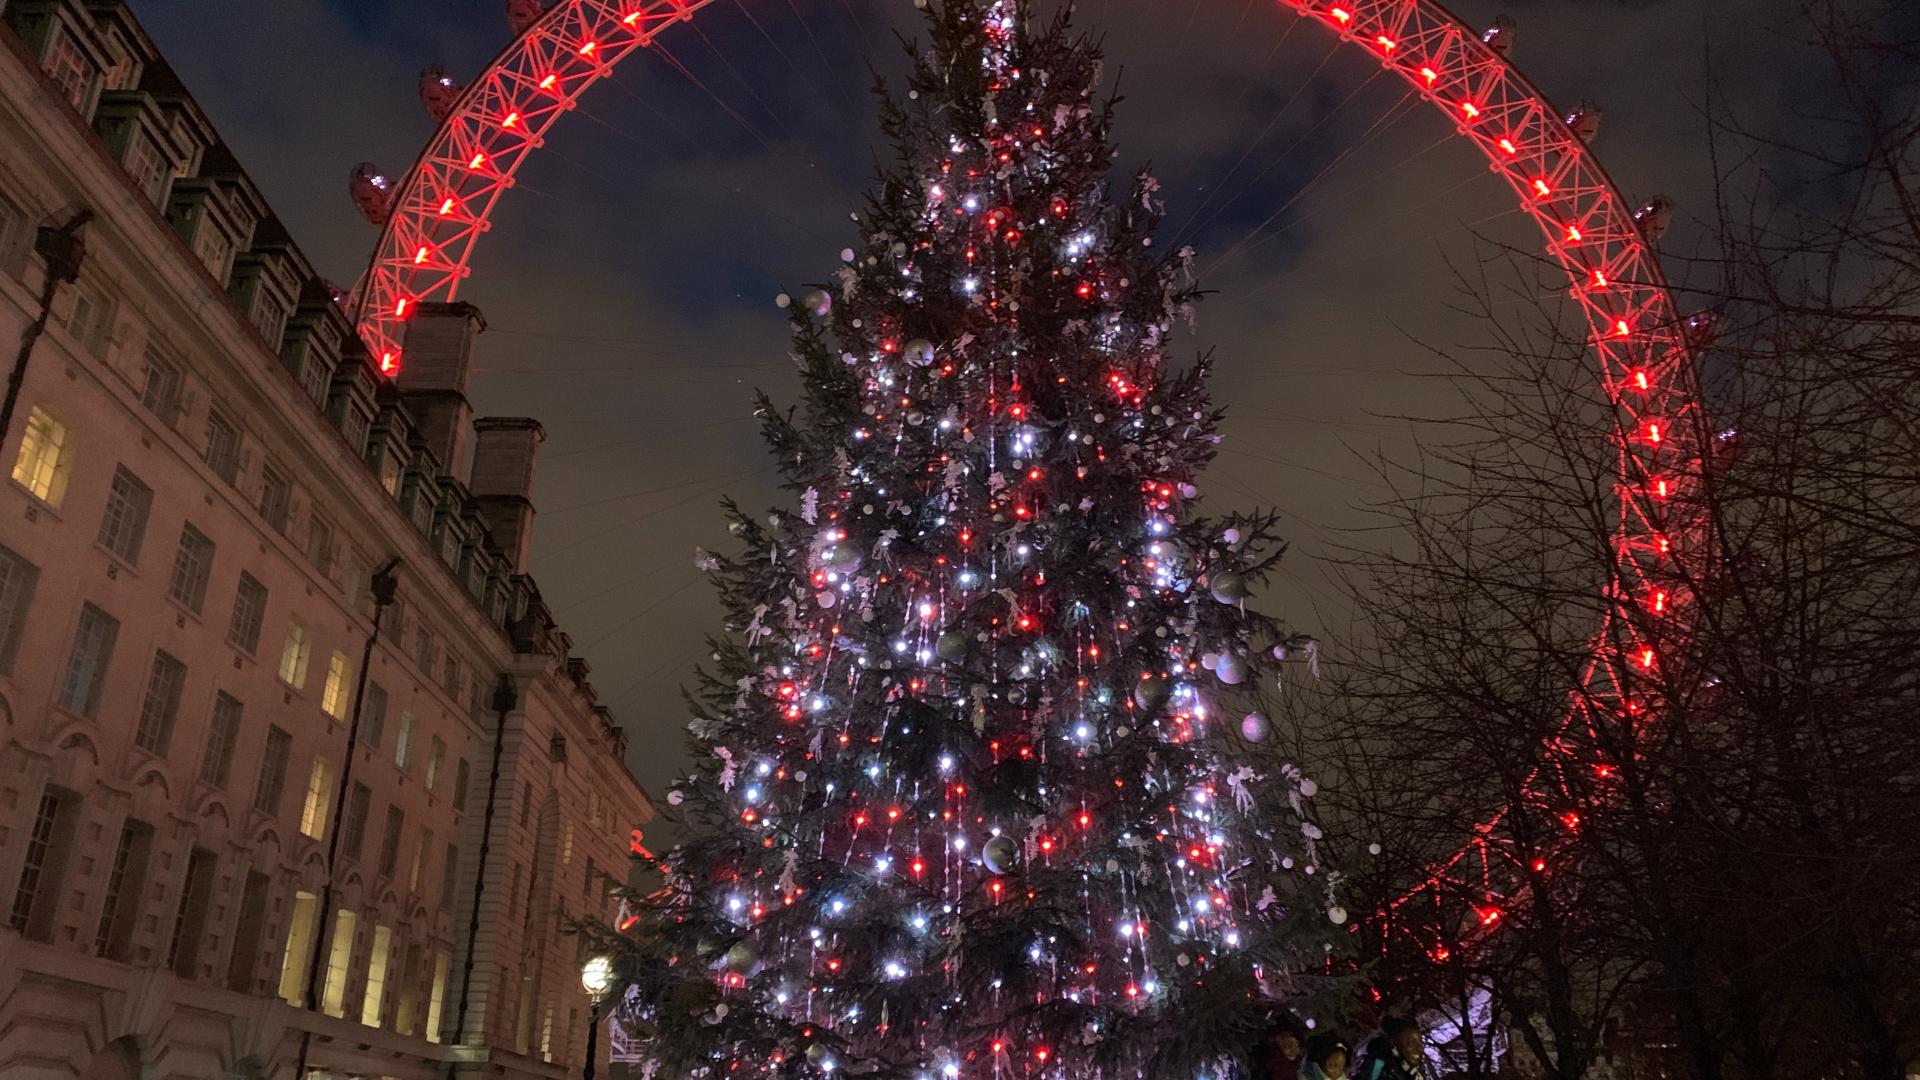 Waterloo Christmas tree in front of the London Eye